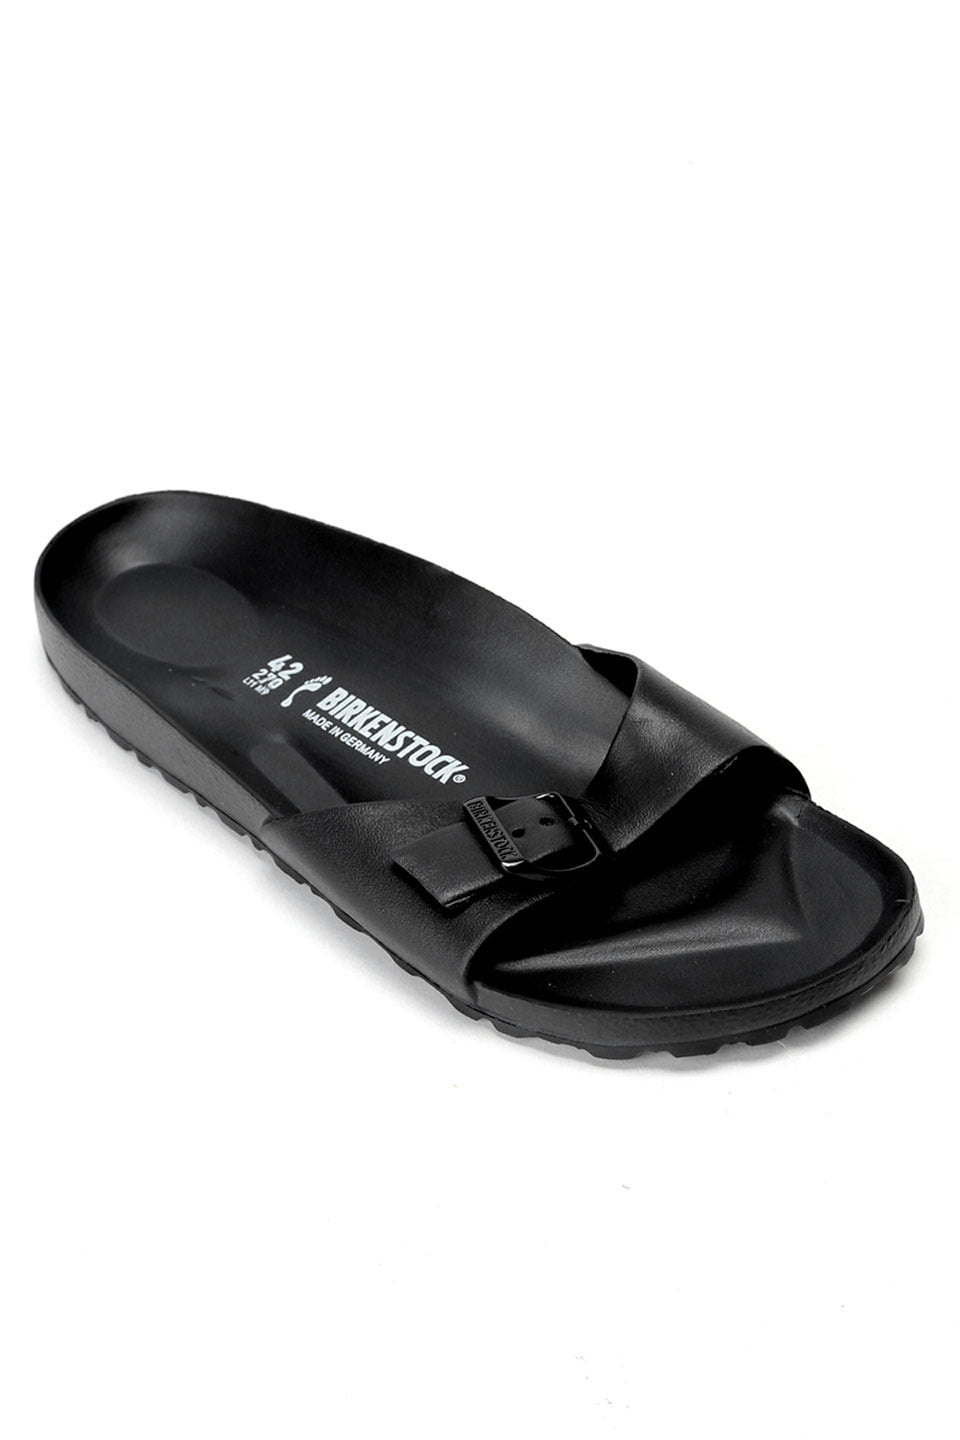 Birkenstock Rubber Slippers in Black 